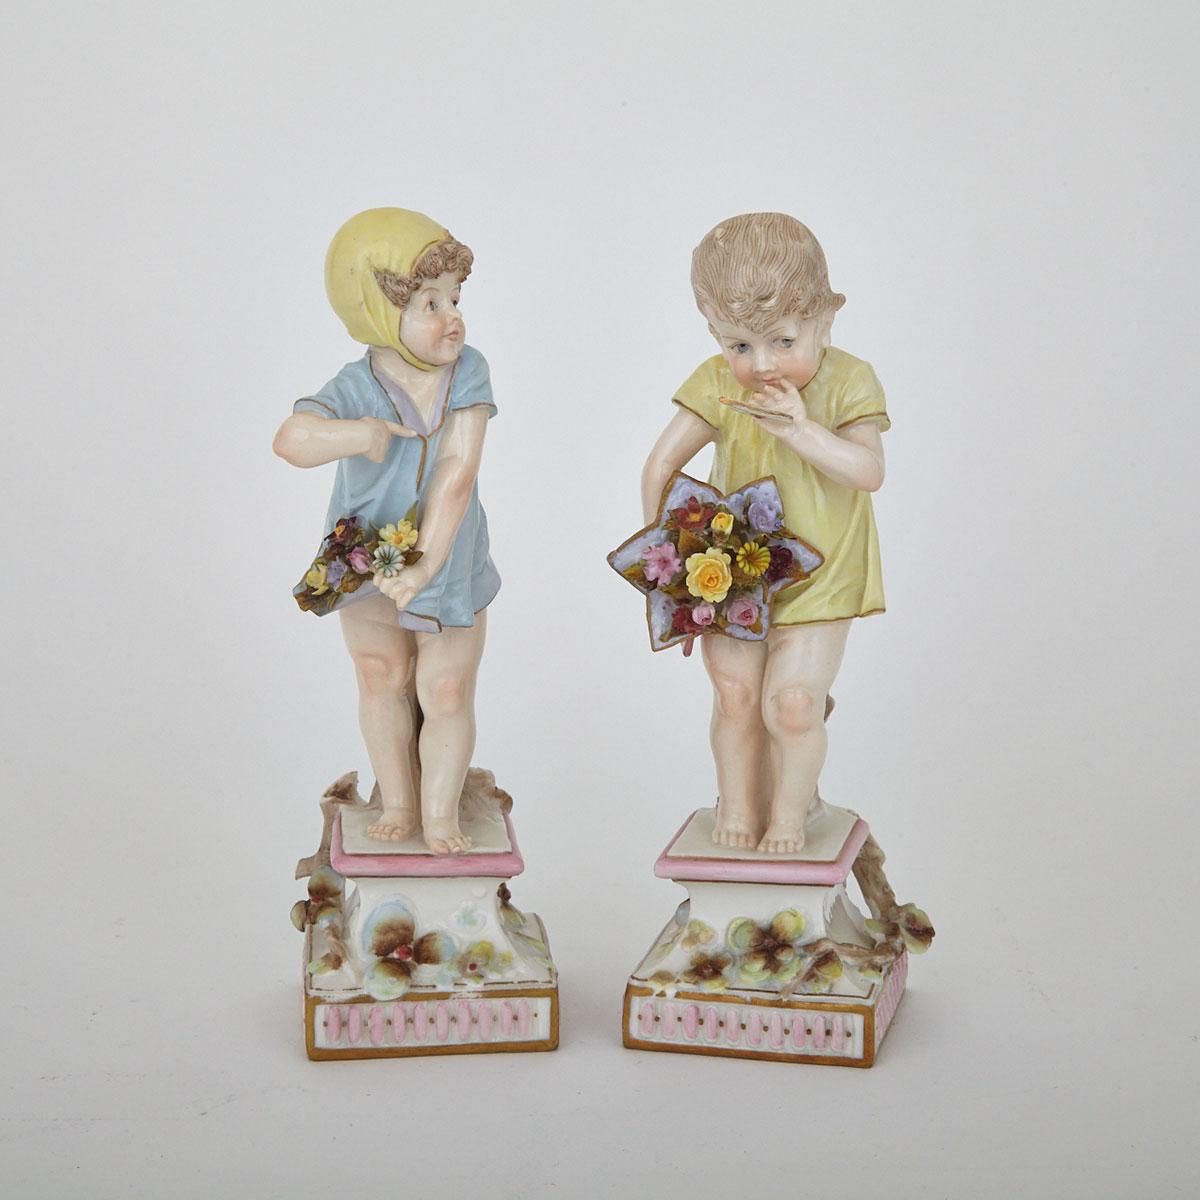 Pair of Ernst Wahliss Wien Teplitz Porcelain Figures of Children, early 20th century